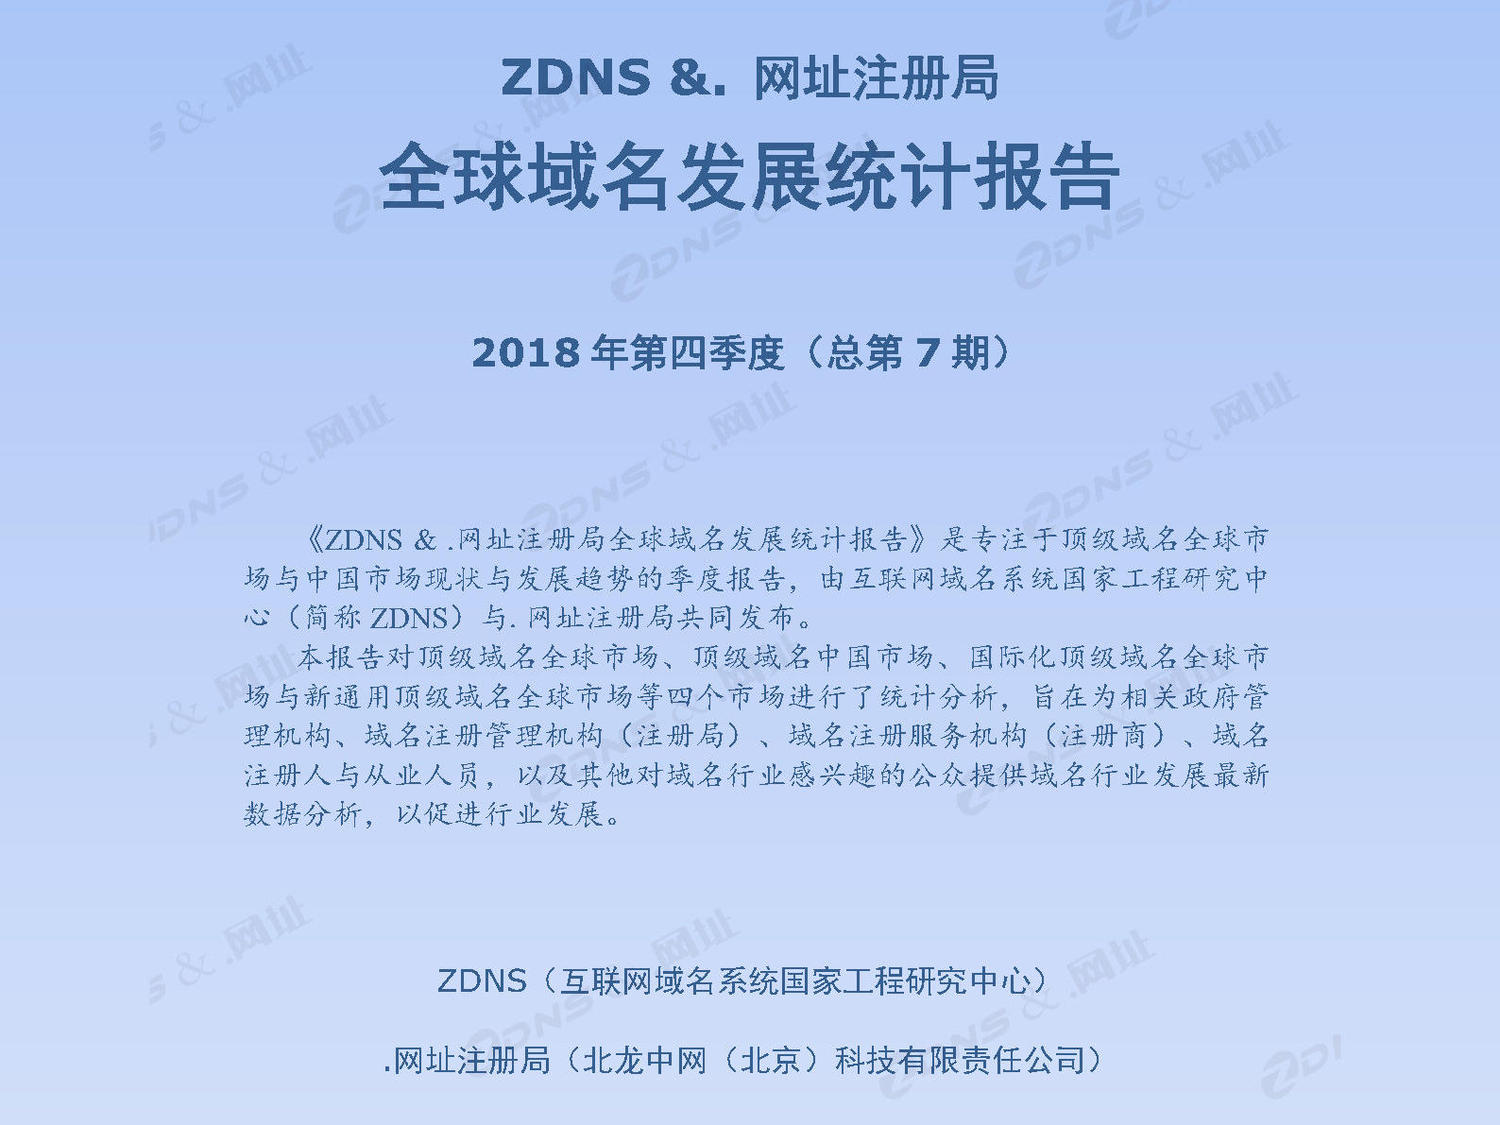 1ZDNS & .网址注册局发布2018年第四季度全球域名发展统计报告.jpg